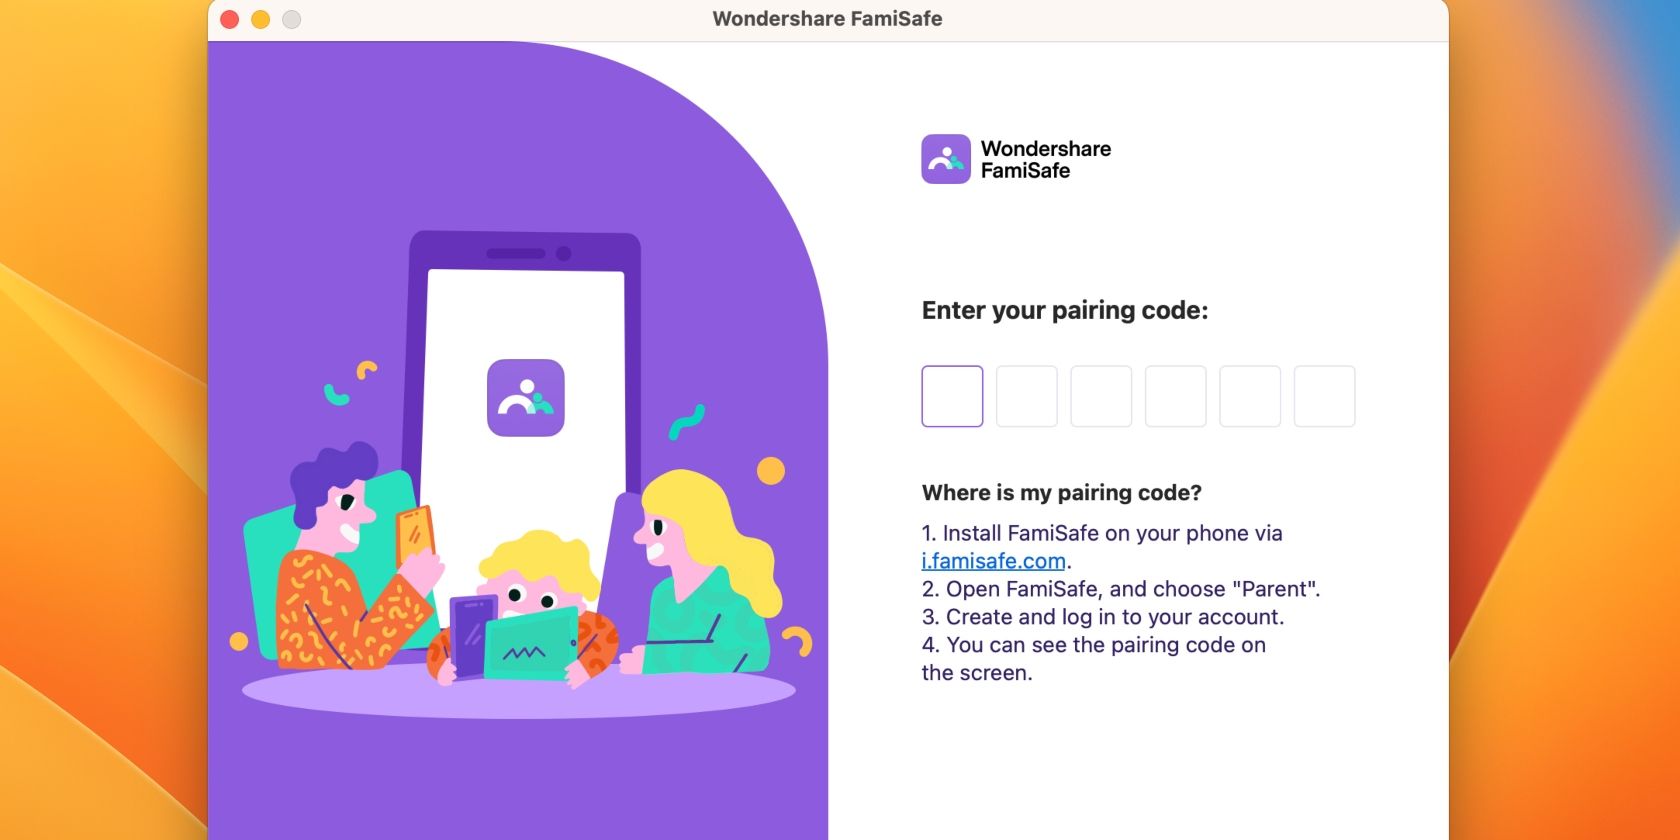 Wondershare FamiSafe application installation page